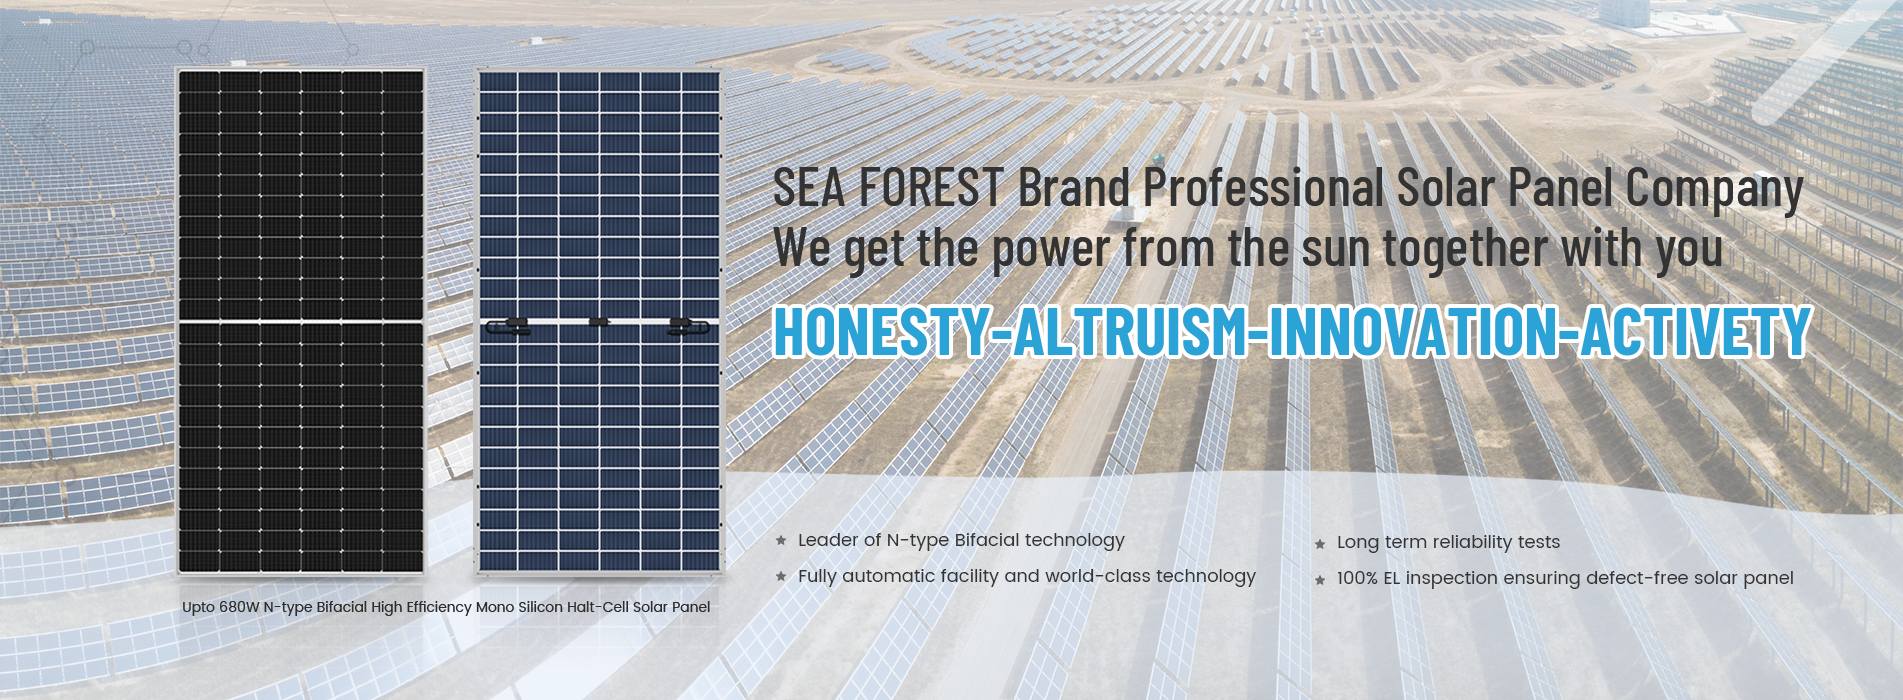 Professional Solar Panel Company